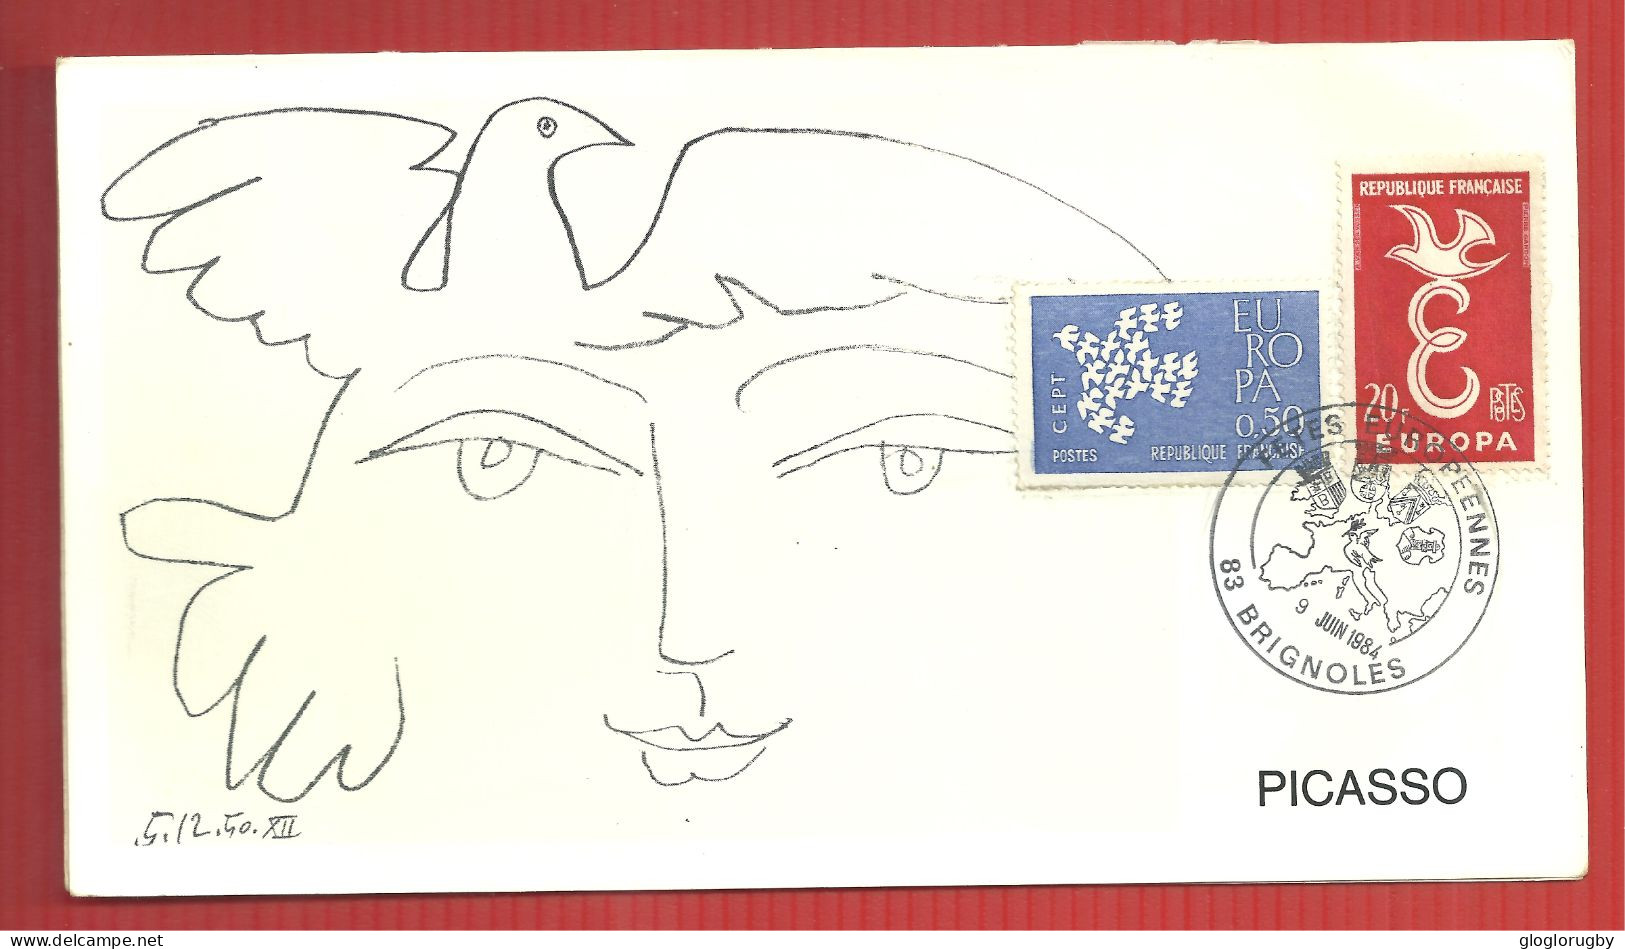 FDC PICASSO  LE VISAGE DE LA PAIX EUROPA  9 6 1984  RARE - Picasso